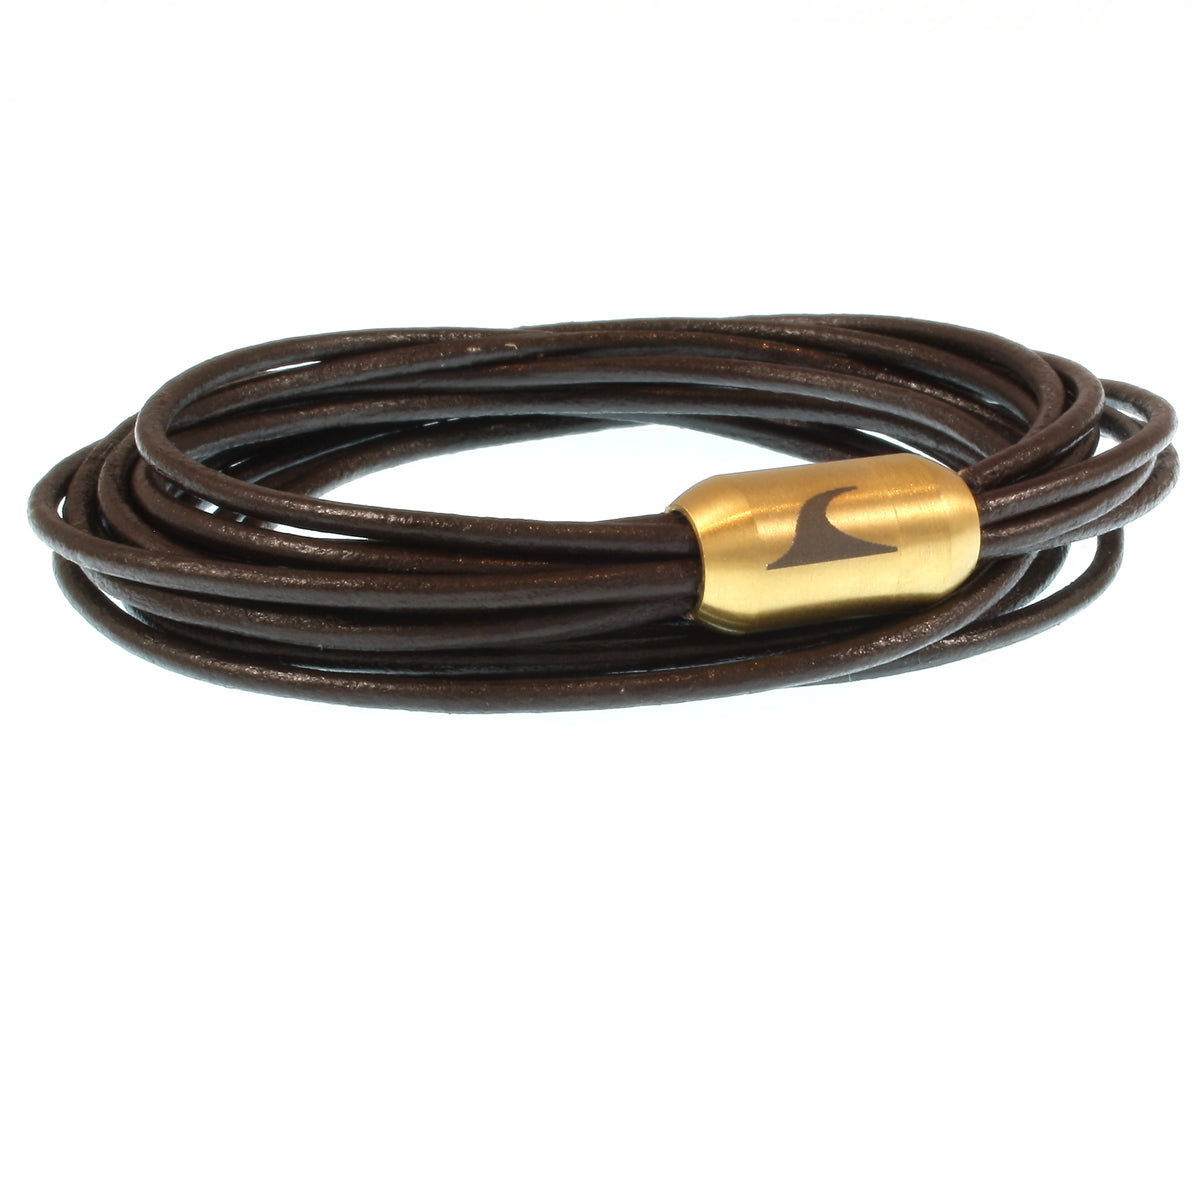 Damen-Leder-armband-fem2-braun-gold-Edelstahlverschluss-vorn-wavepirate-shop-r